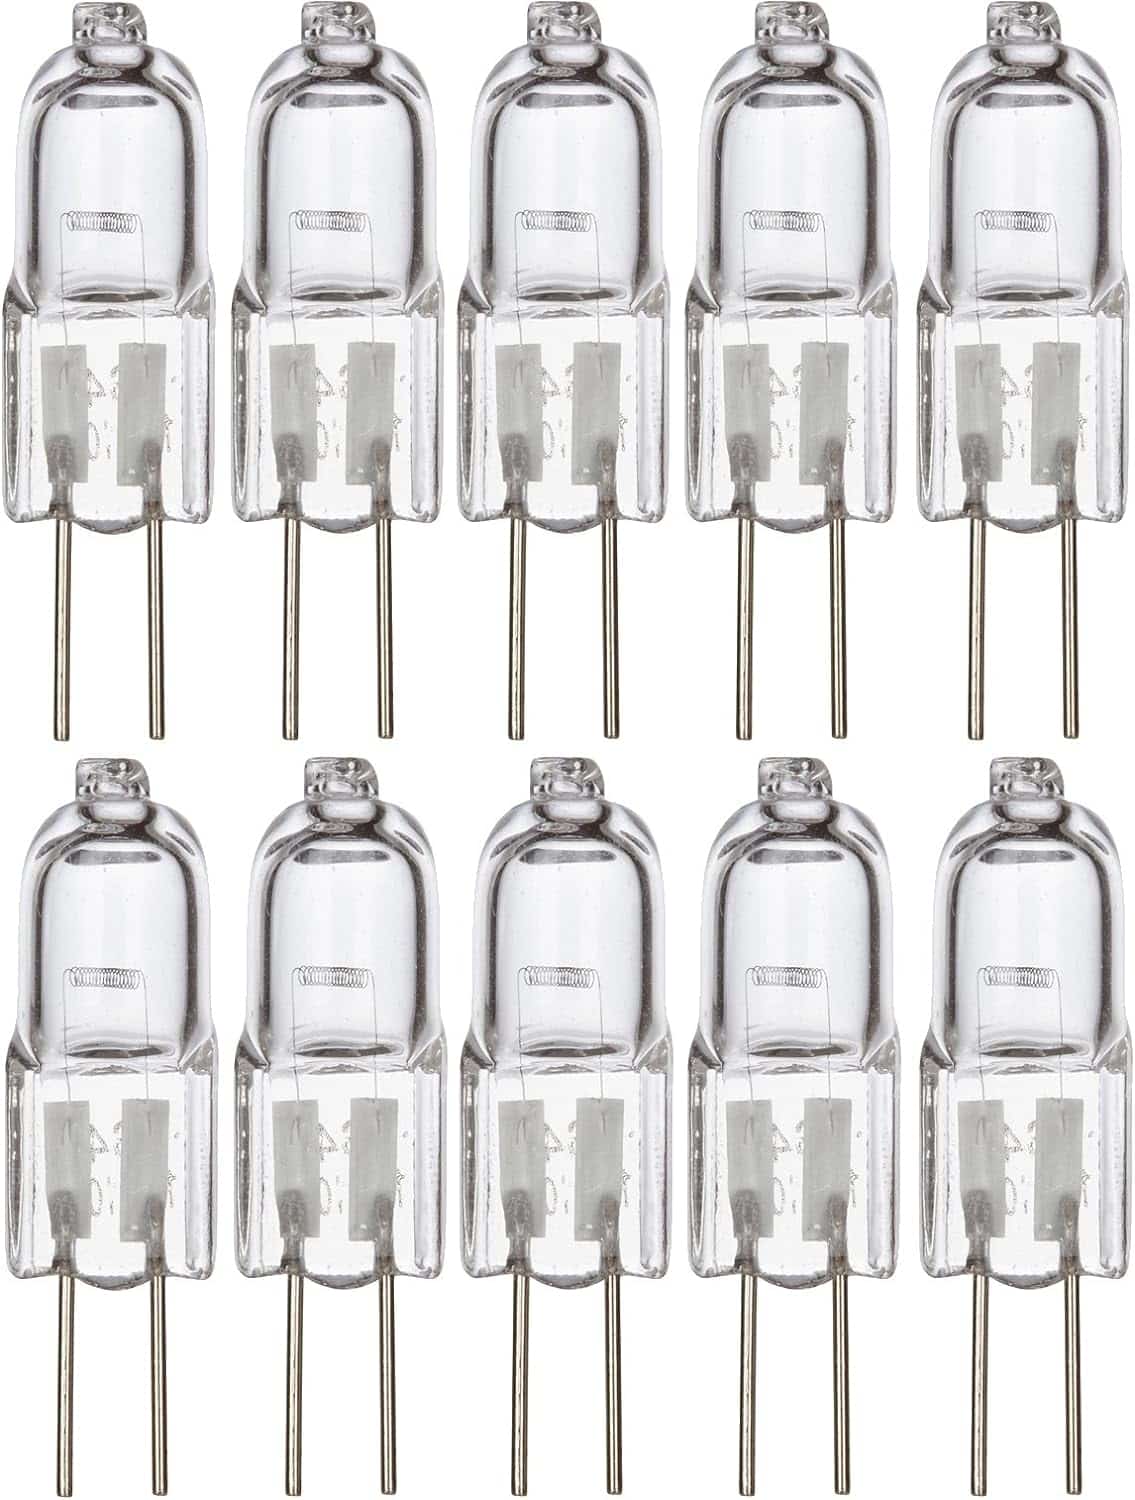 Simba Lighting Halogen G4 T3 20 Watt 280lm Bi-Pin Bulb (10 Pack) 12 Volt A/C or D/C for Accent Lights Review